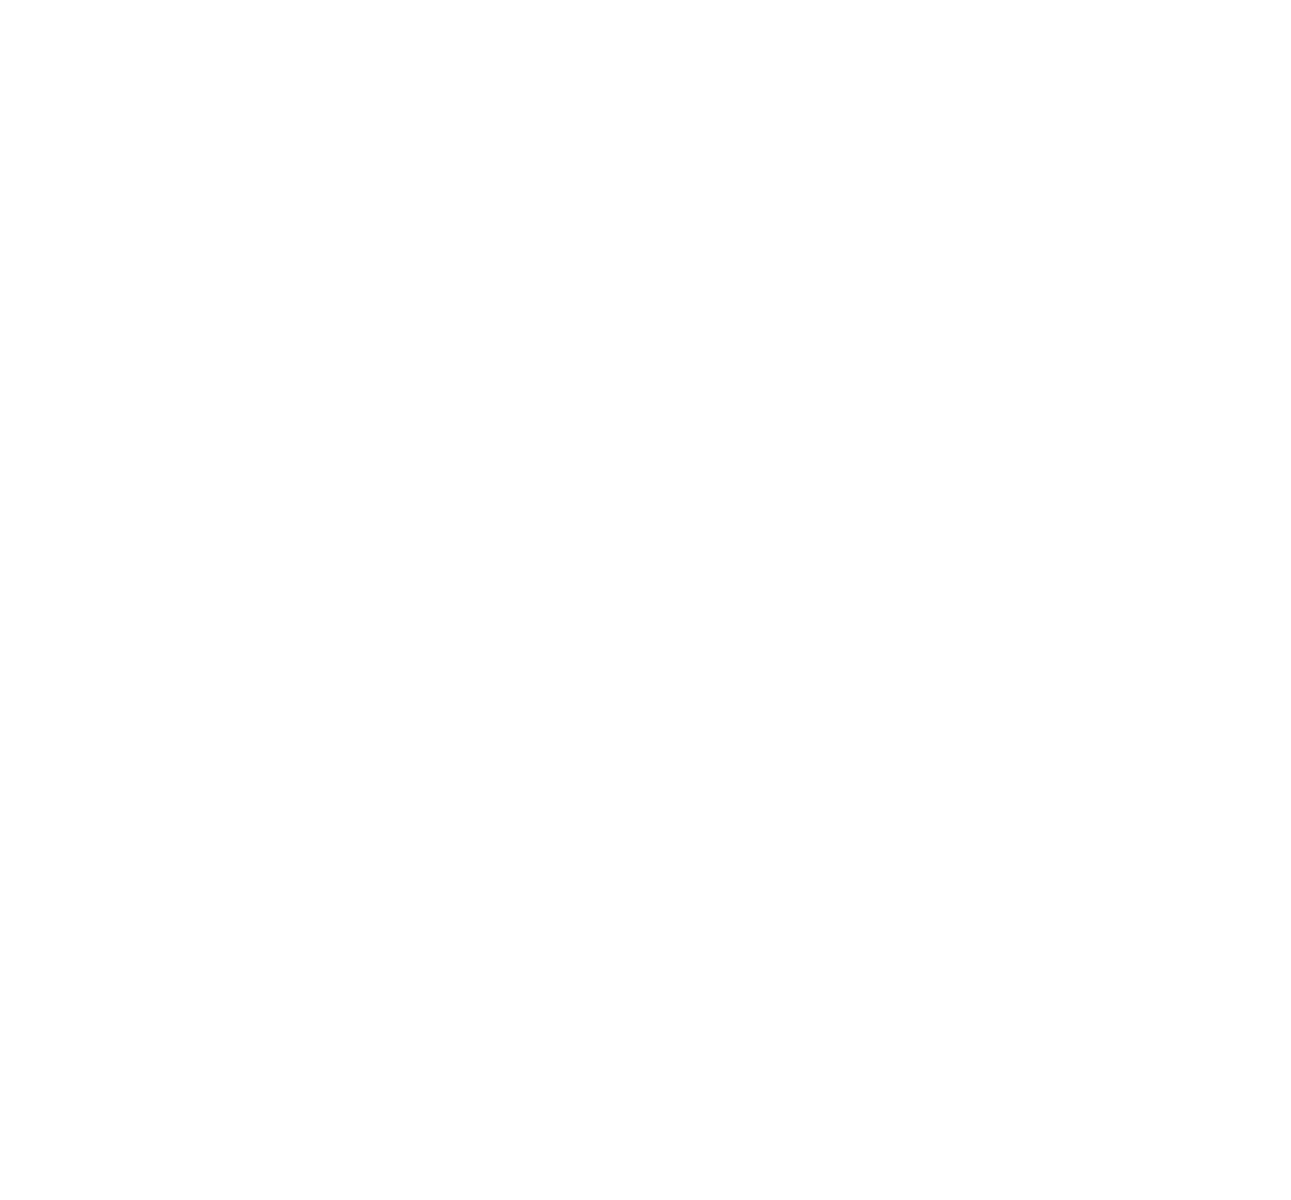 Tanaka of Tokyo